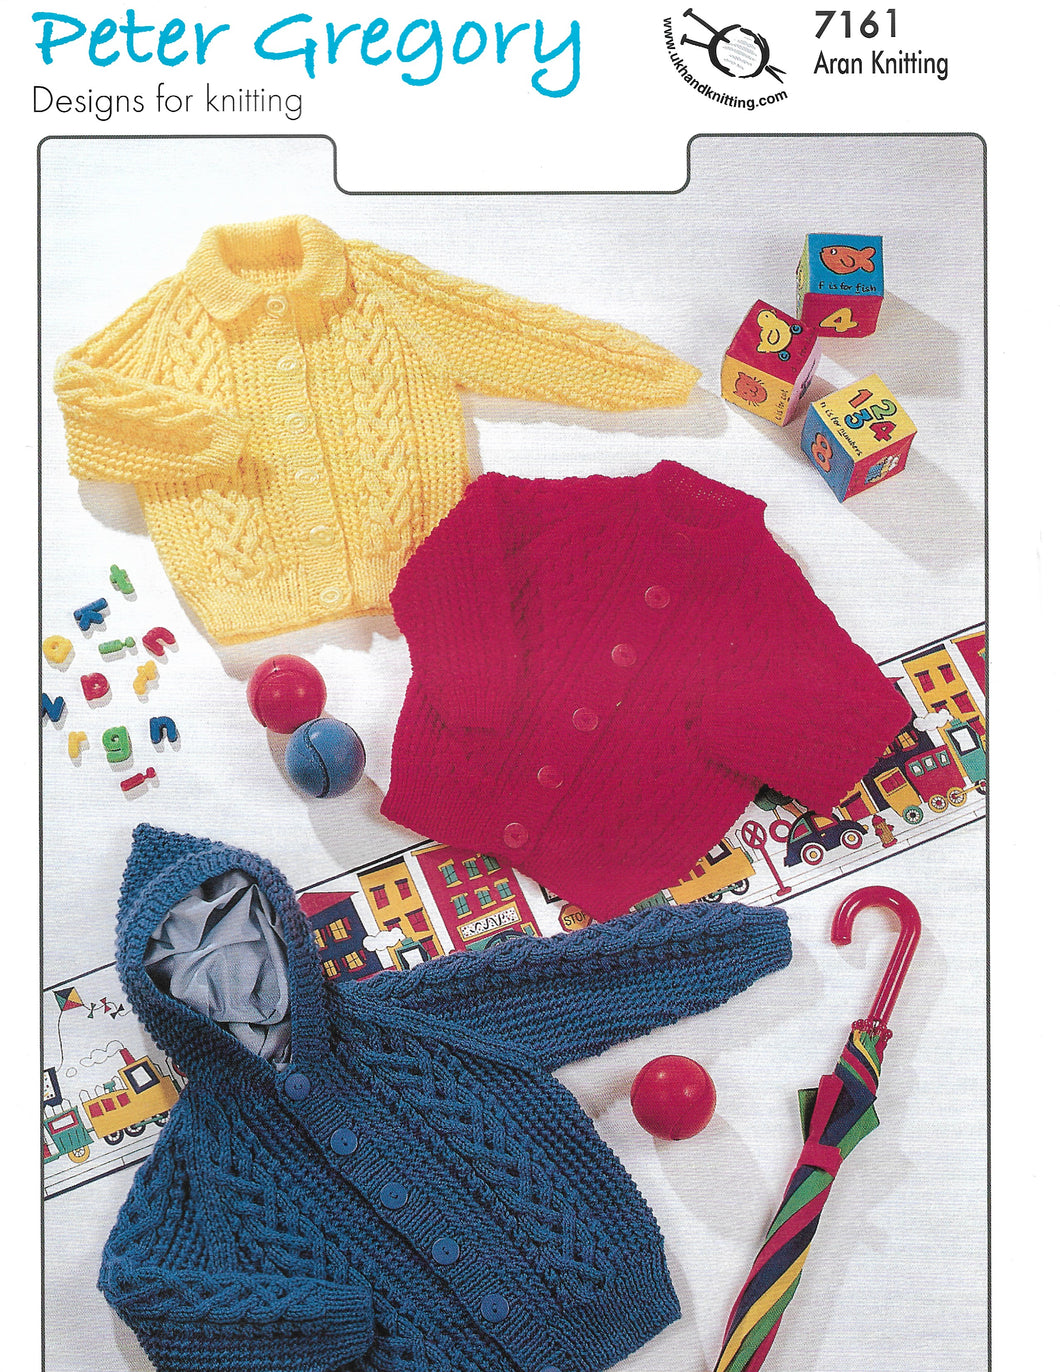 Knitting Pattern Leaflet Peter Gregory 7161 DK Kids Raglan Cable Jackets / Hooded Top